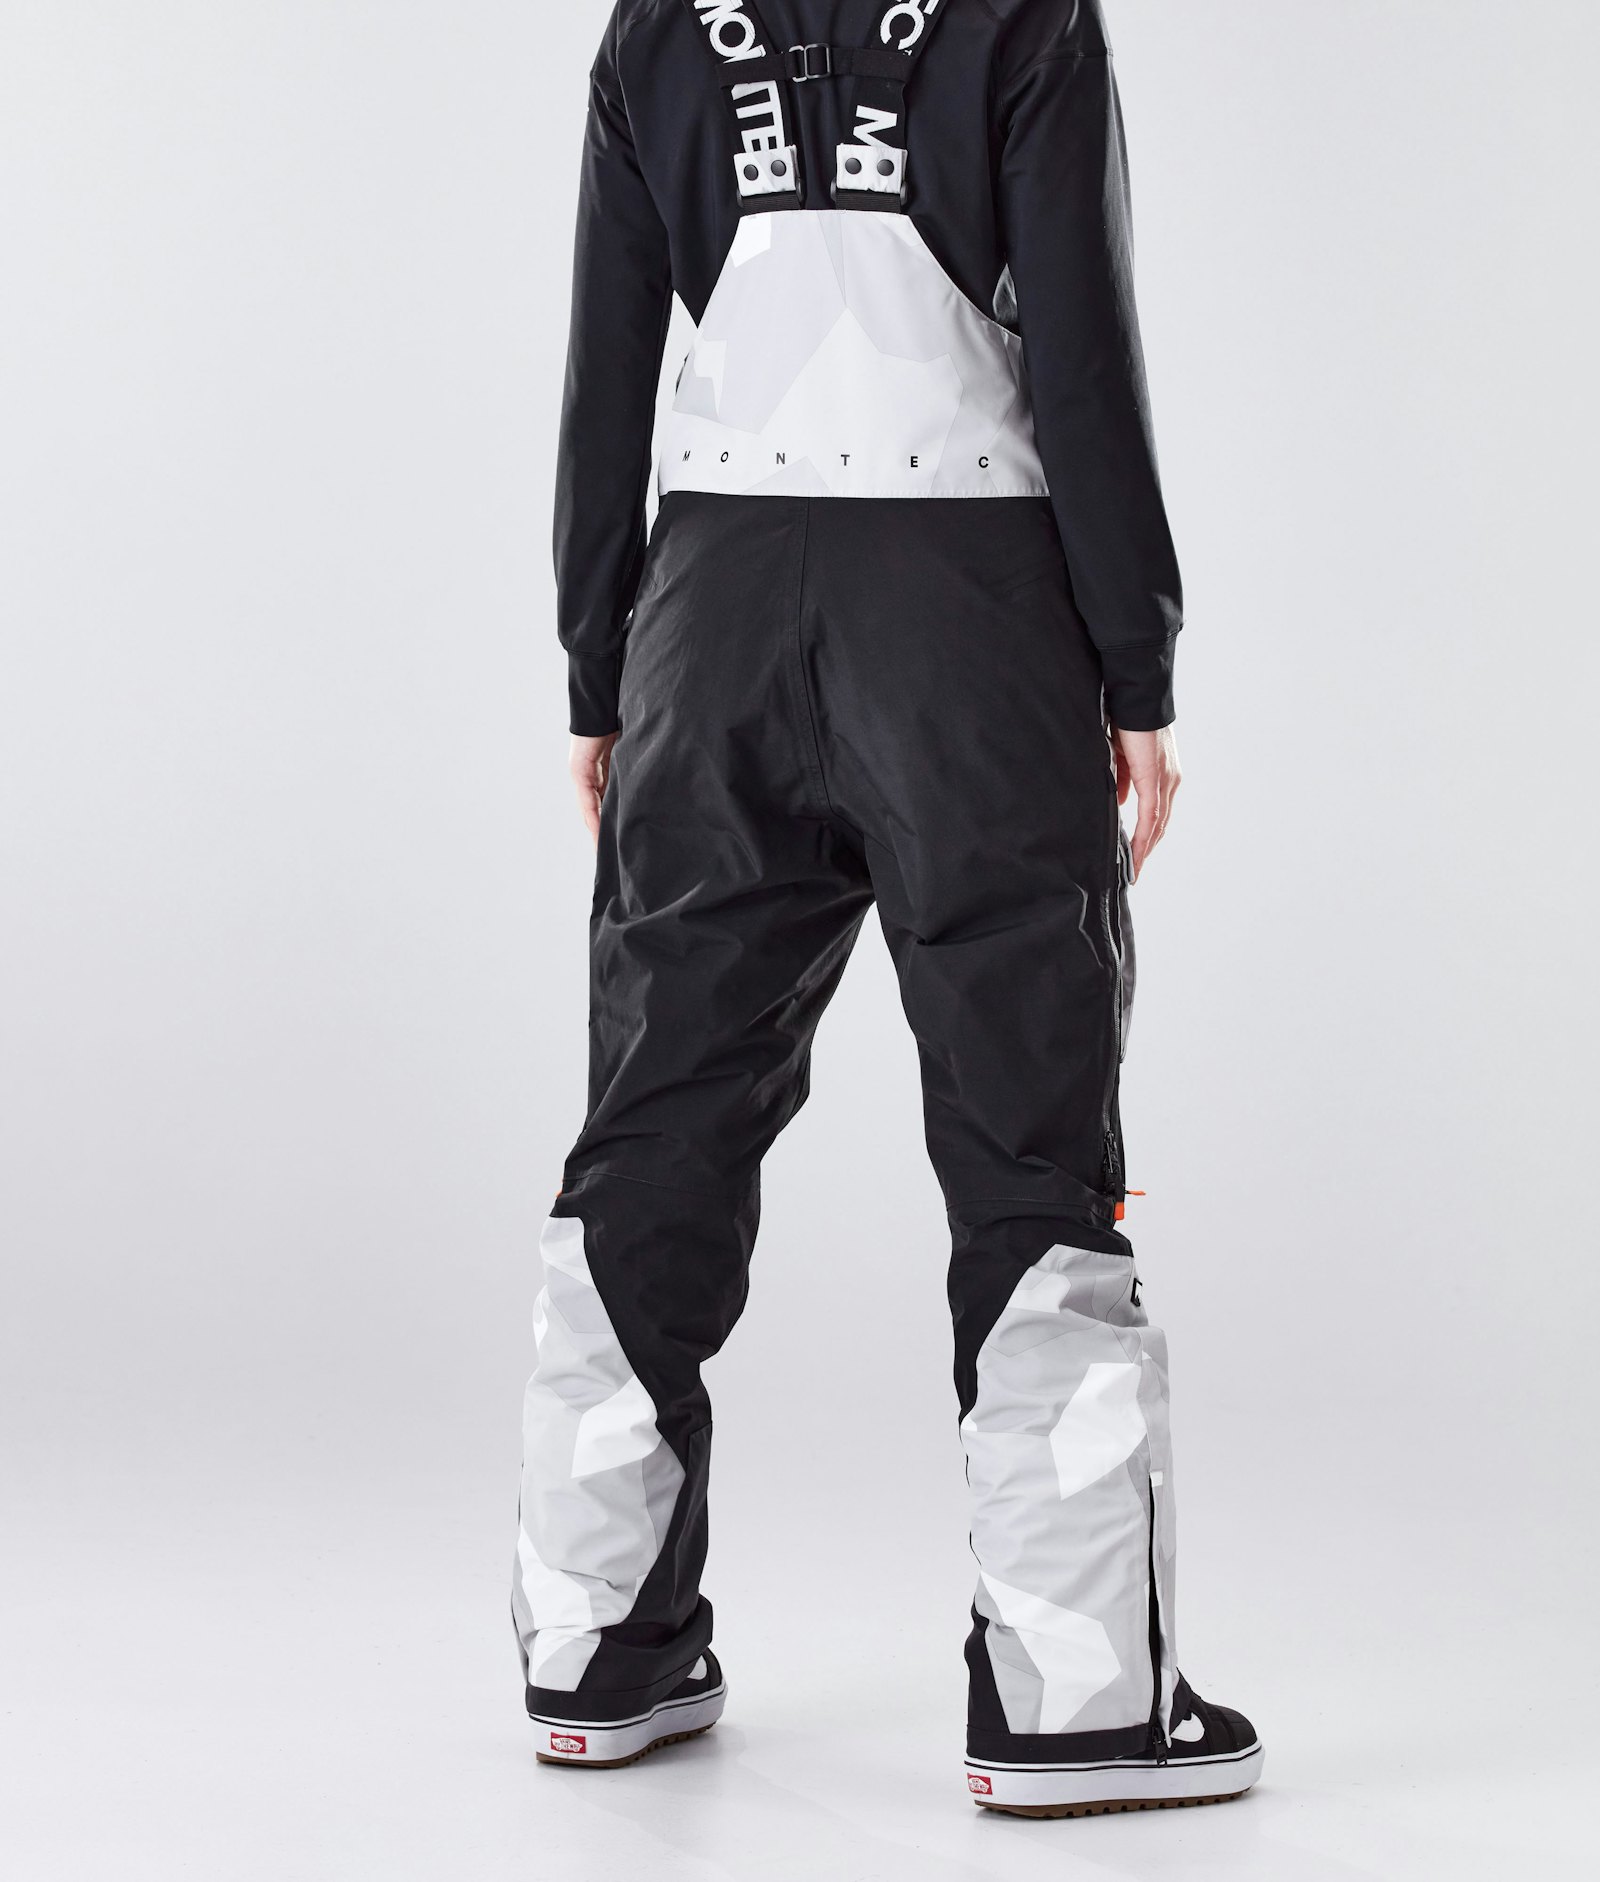 Fawk W 2020 Snowboard Pants Women Snow Camo/Black